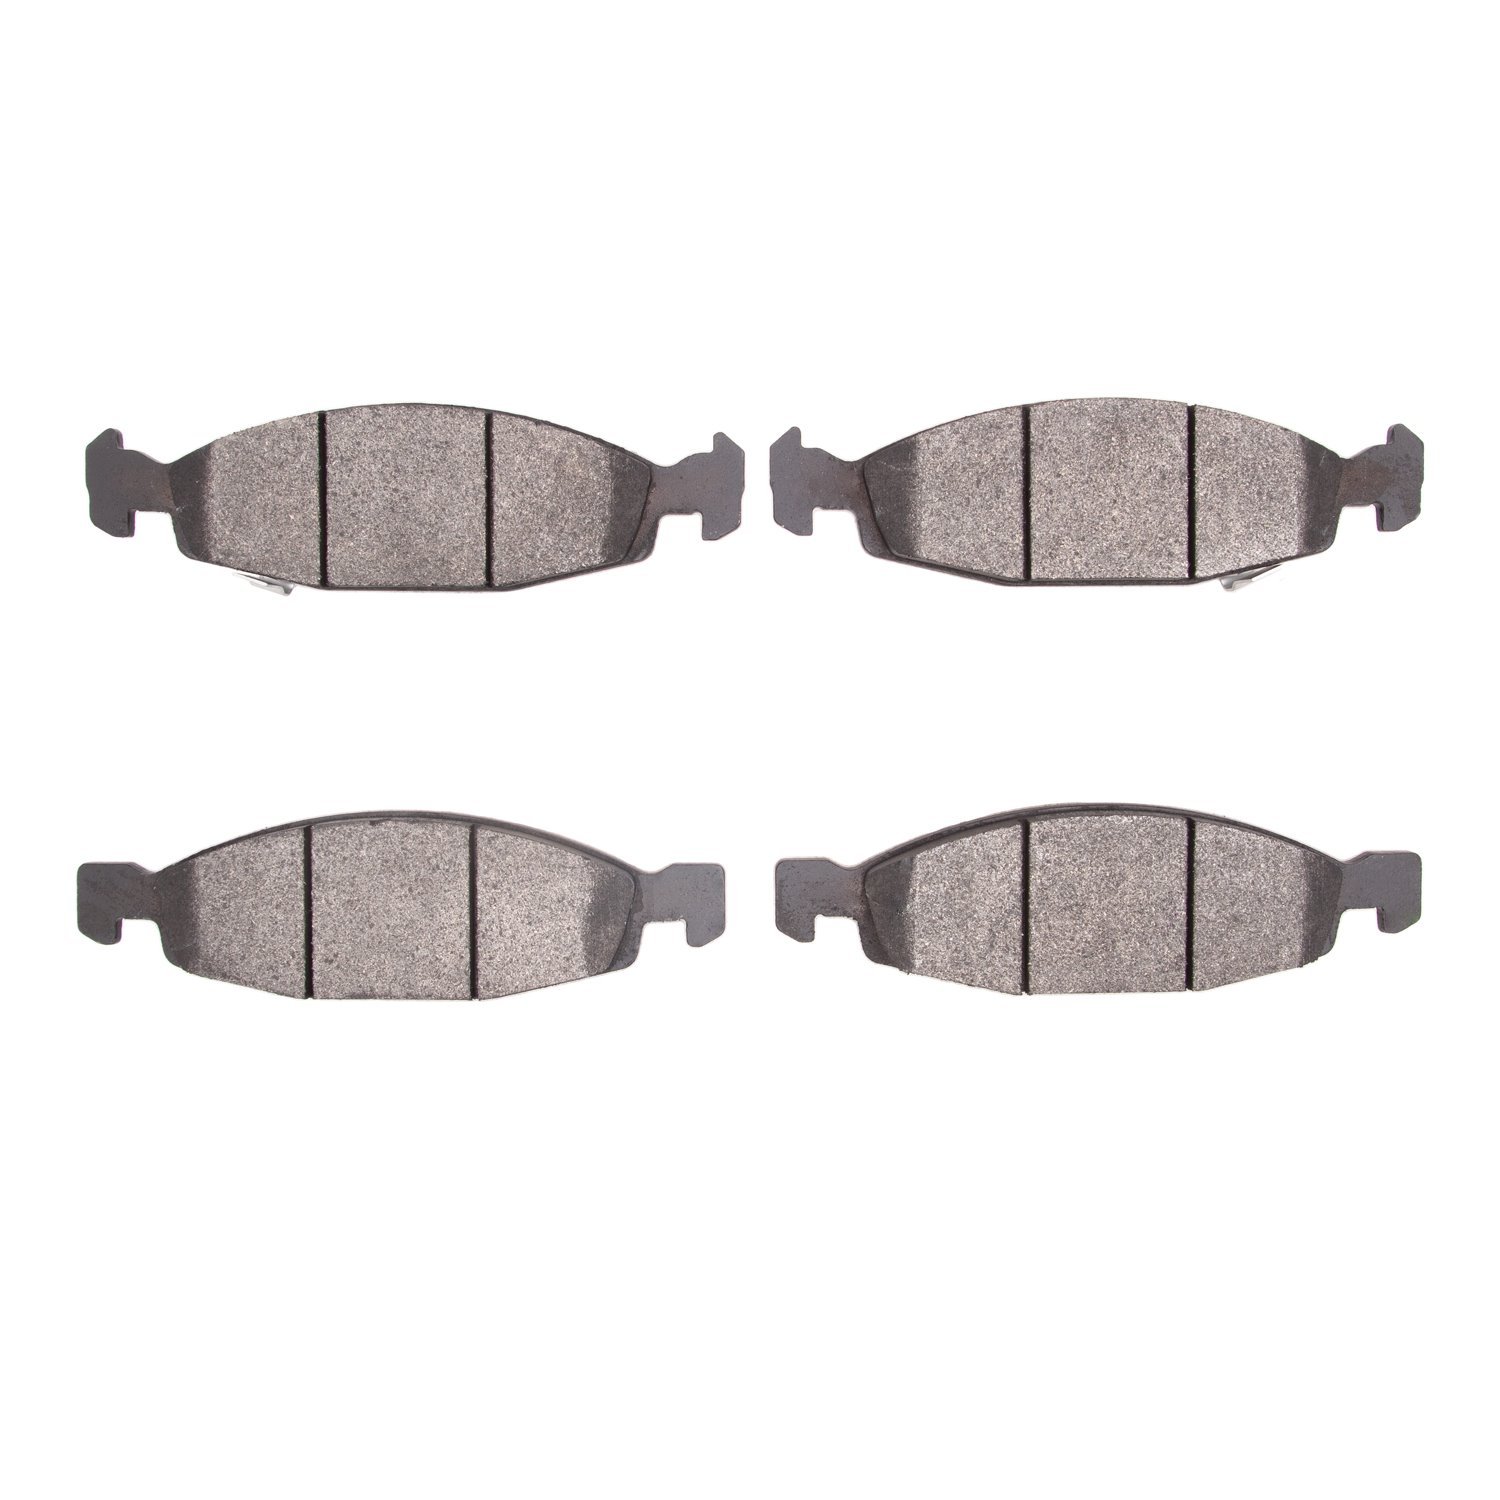 1310-0790-00 3000-Series Ceramic Brake Pads, 1999-2002 Mopar, Position: Front